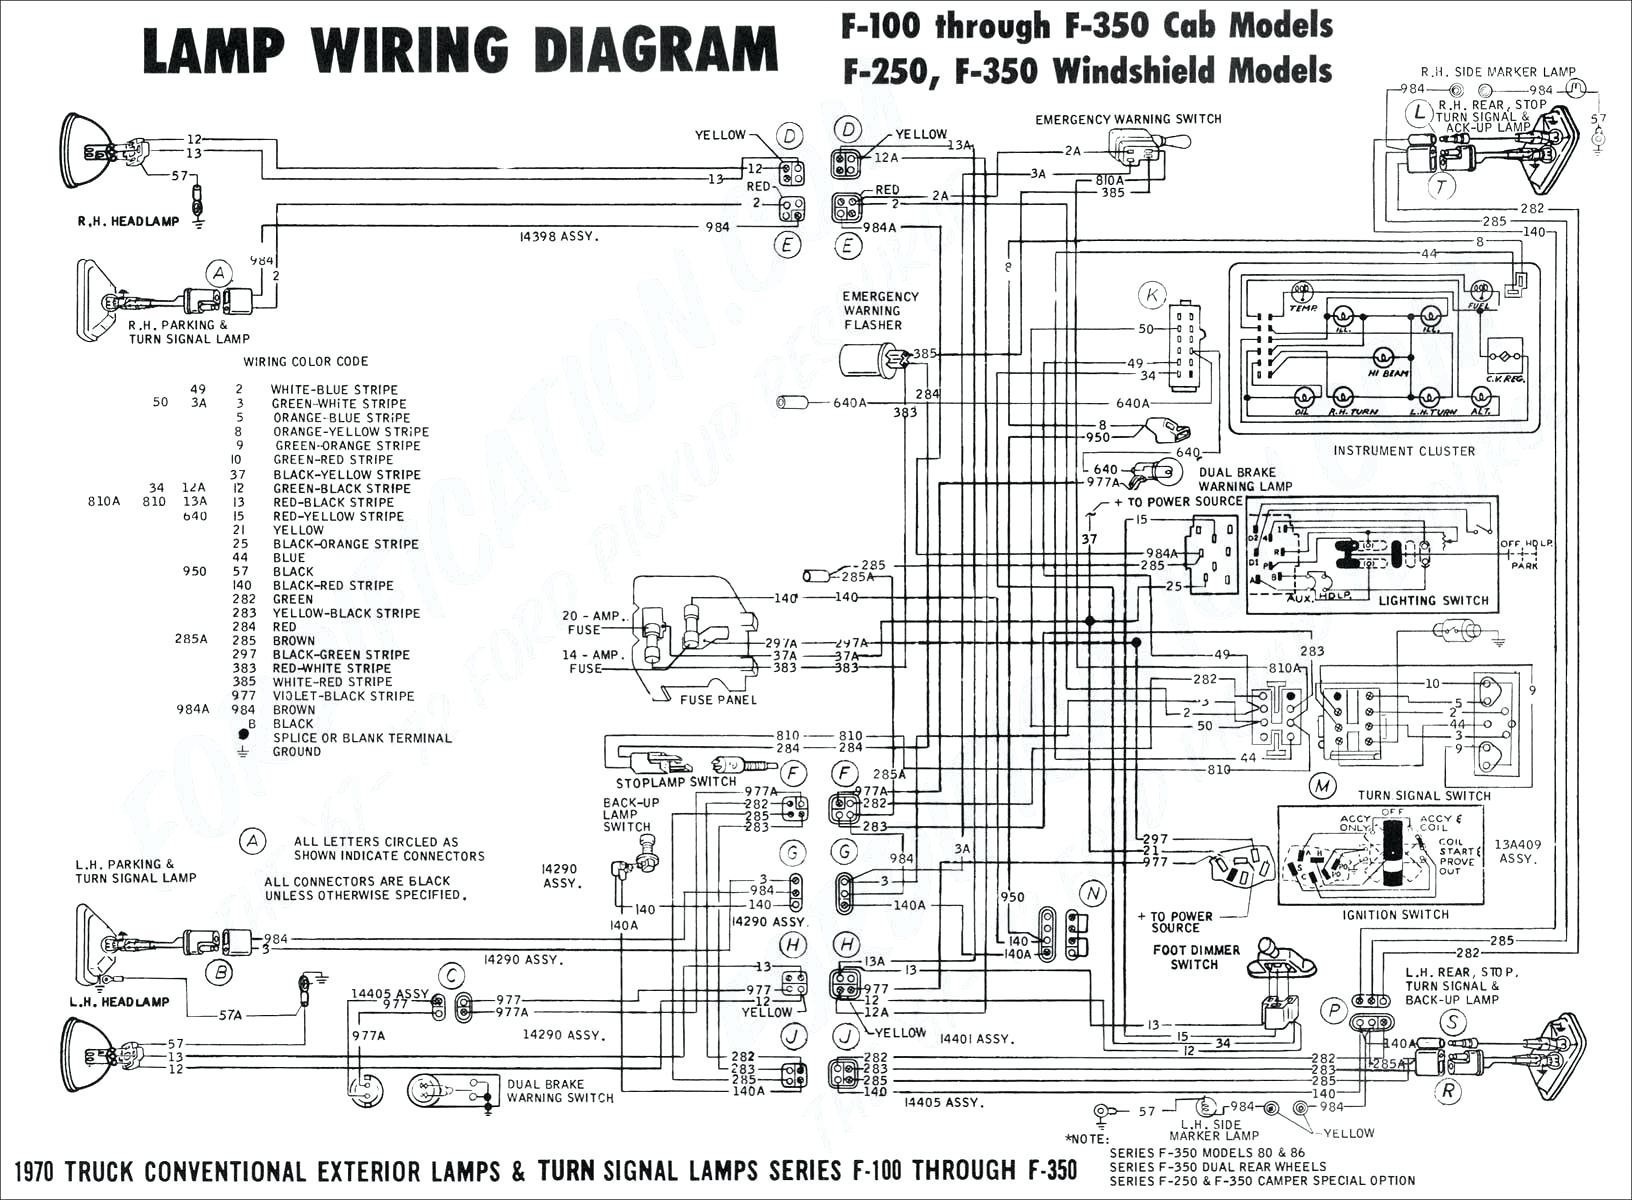 Chevy Lumina Engine Diagram 2001 Chevy Lumina Fuse Diagram Caroldoey Wiring Diagram today Of Chevy Lumina Engine Diagram